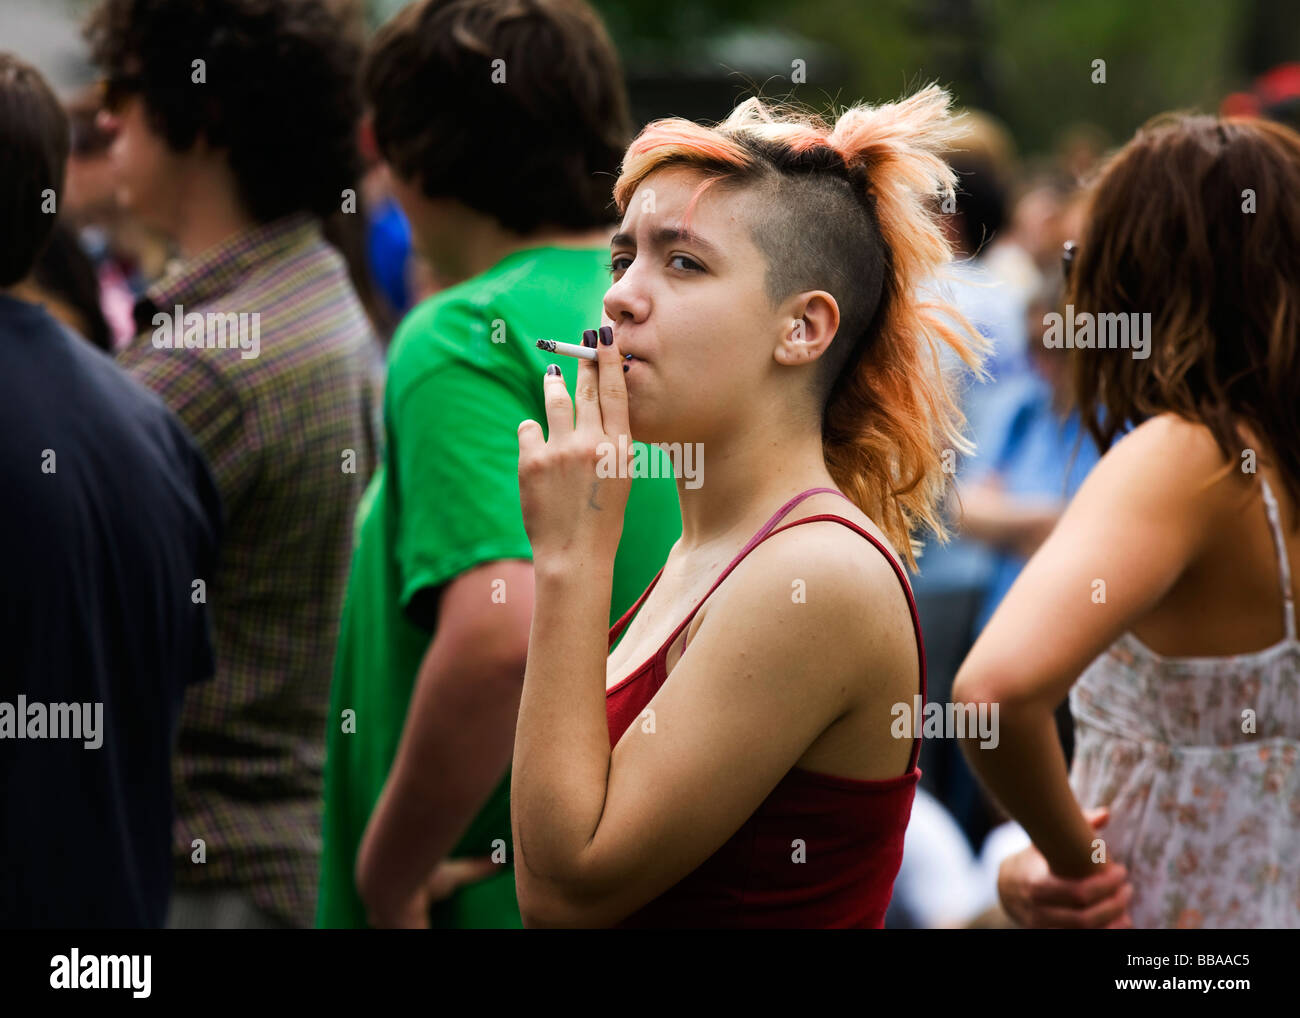 Smoking teen female with Mohawk haircut Stock Photo